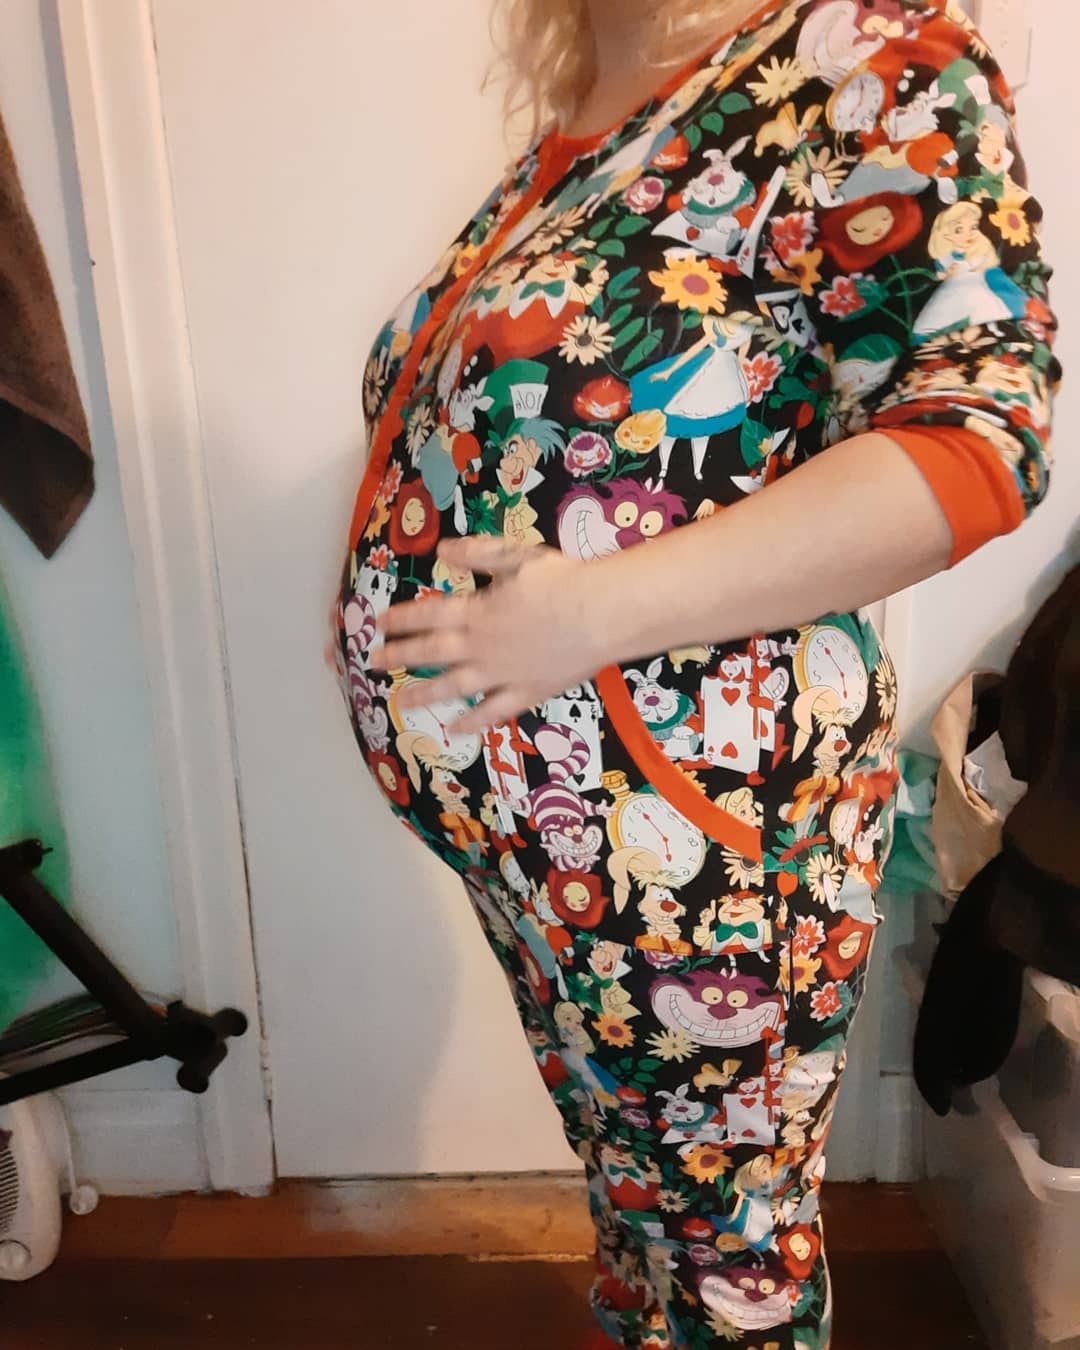 19 weeks feeling like a balloon already! #19weekspregnant #pregnancy #pregnantfetish #pregnantbelly #pregnancynumber4 #aussie #bbw